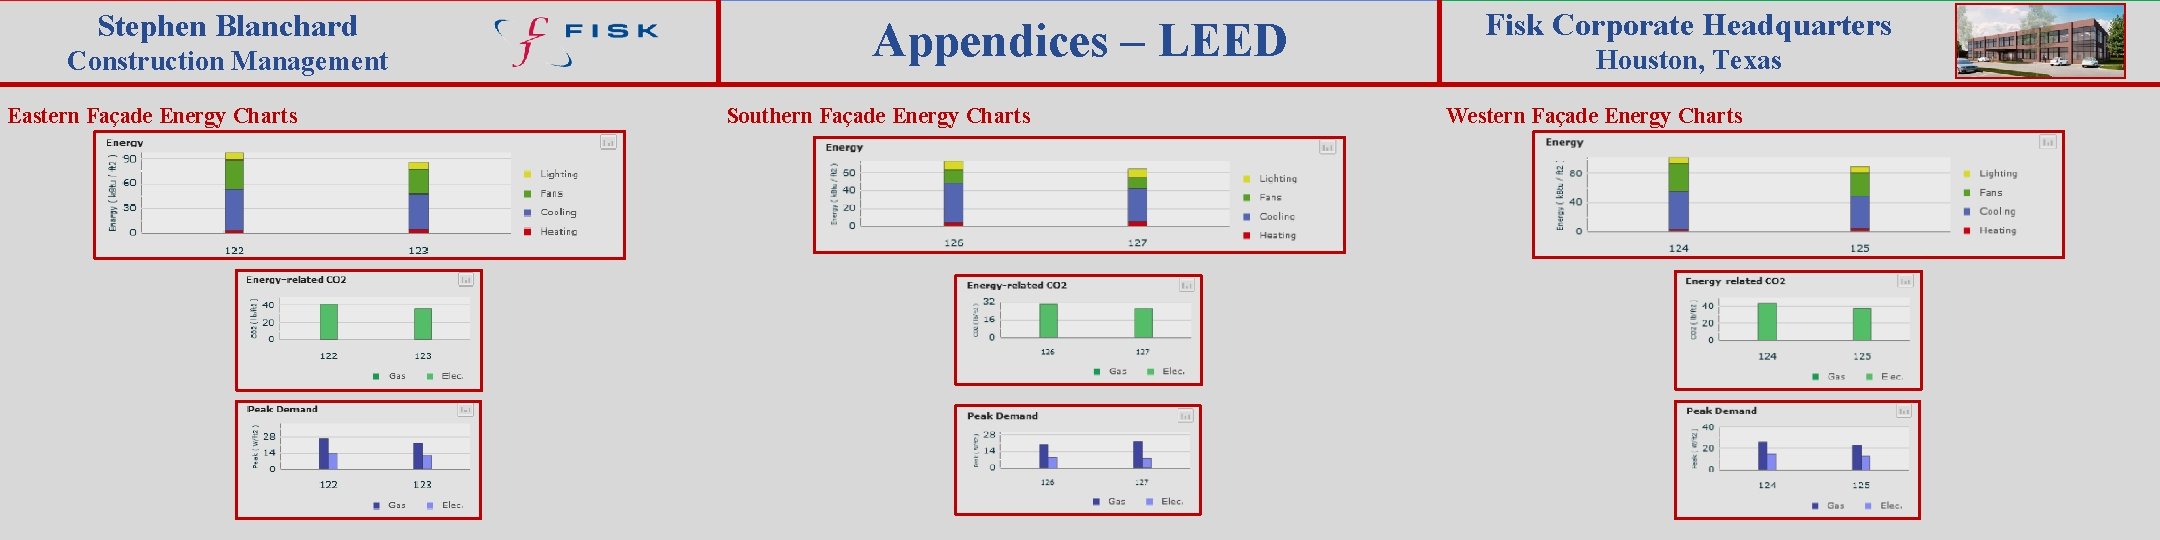 Stephen Blanchard Construction Management Eastern Façade Energy Charts Appendices – LEED Southern Façade Energy